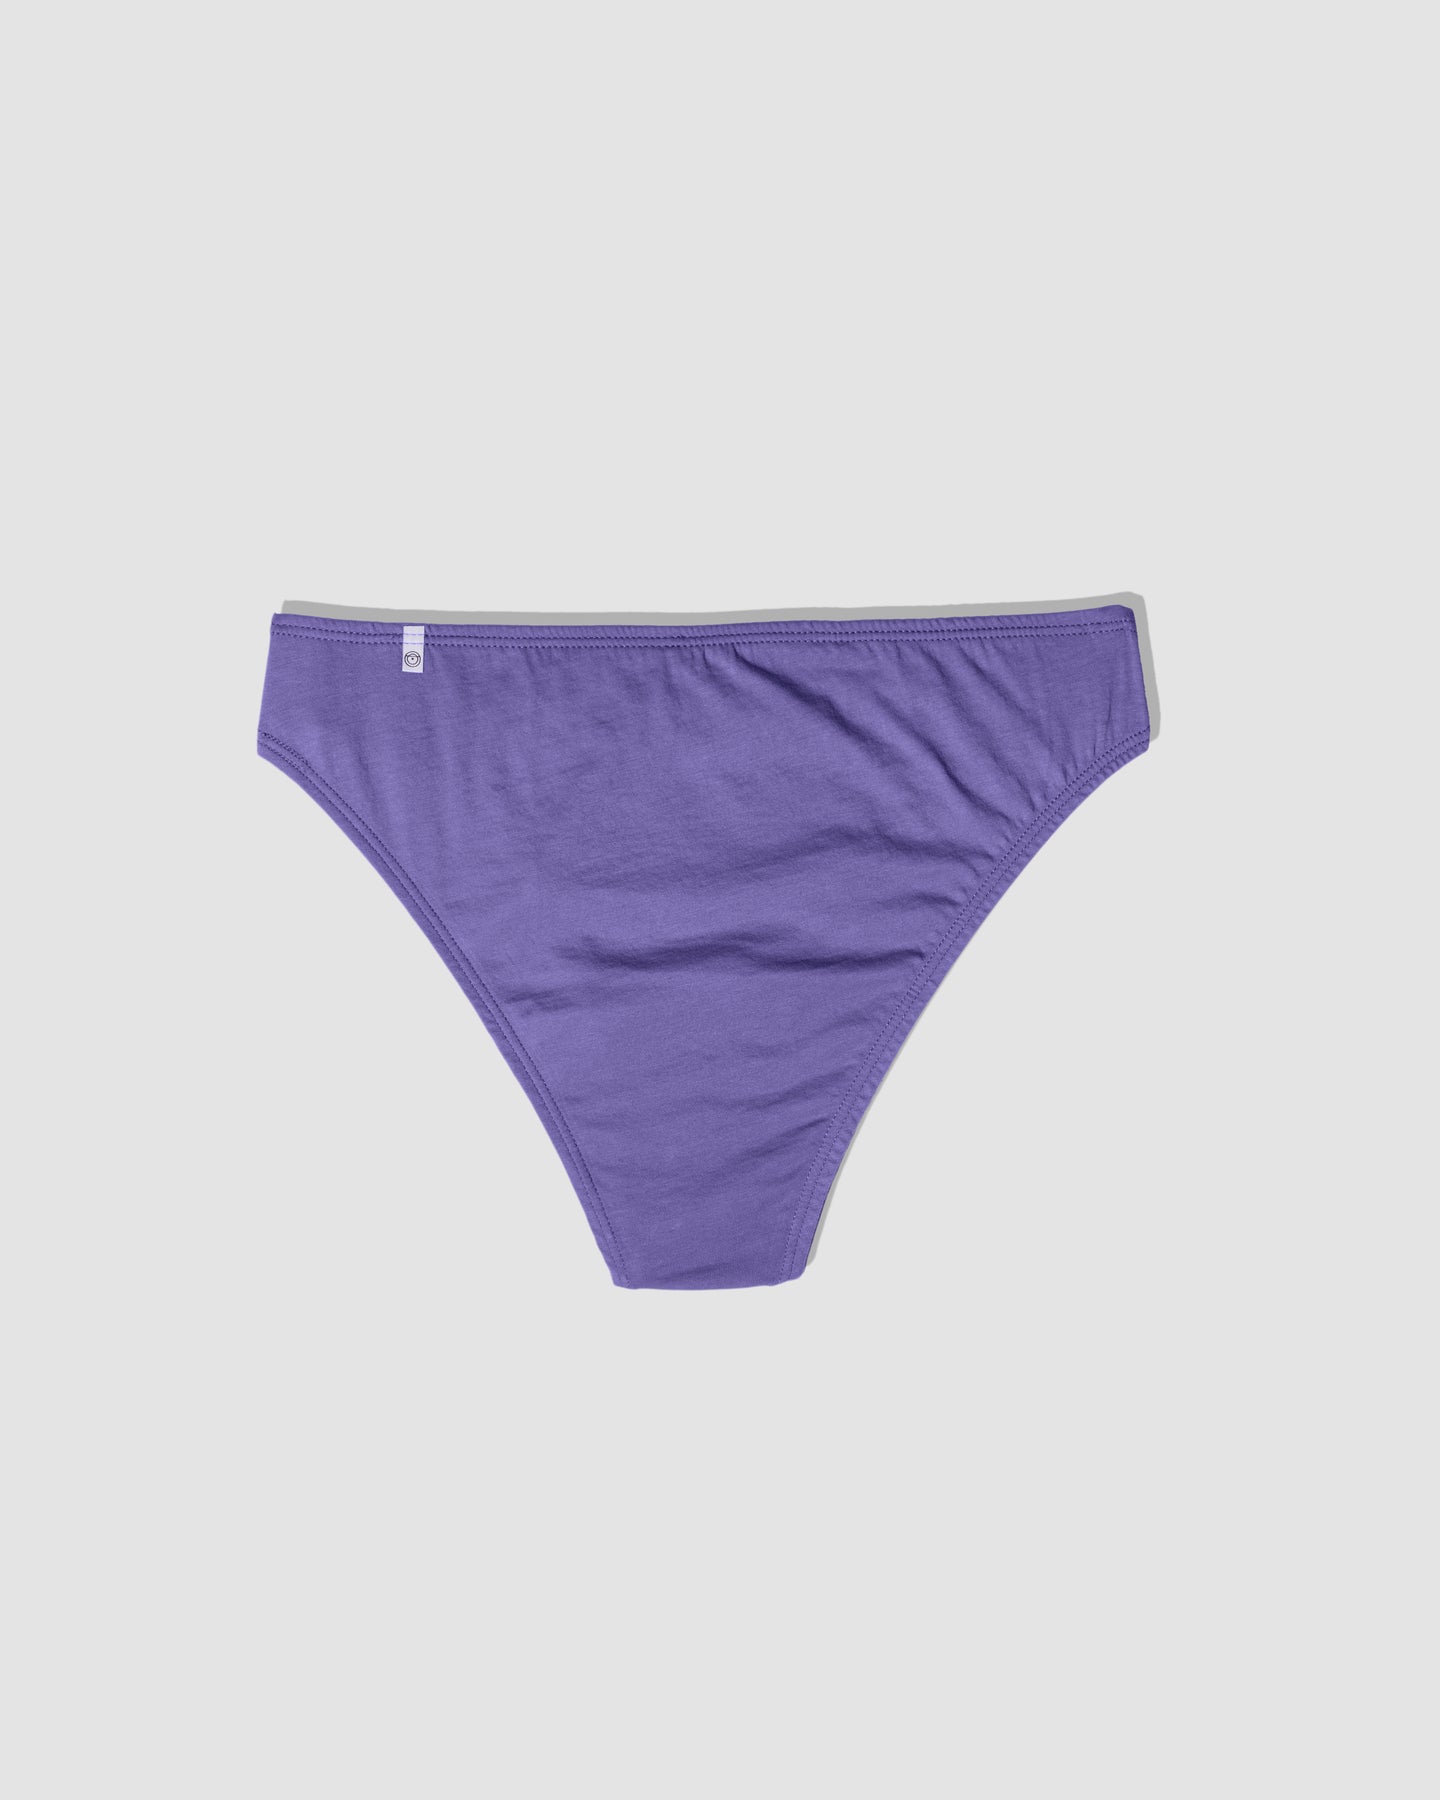 french cut − 100% organic pima cotton underwear, oddobody